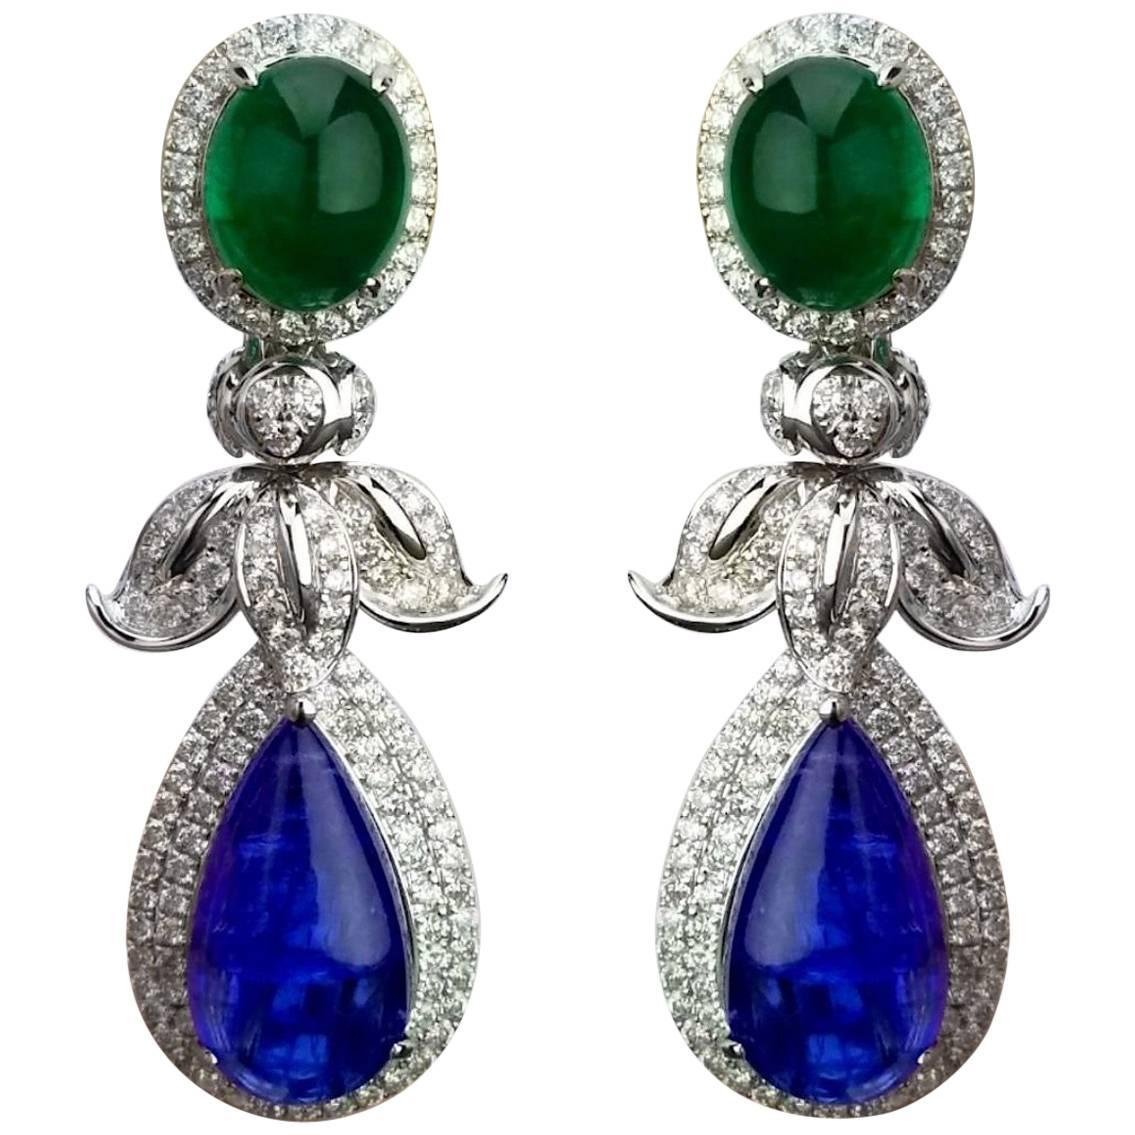 13.44 Carat Emerald and 28.76 Carat Tanzanite Cabochon Dangling Earrings